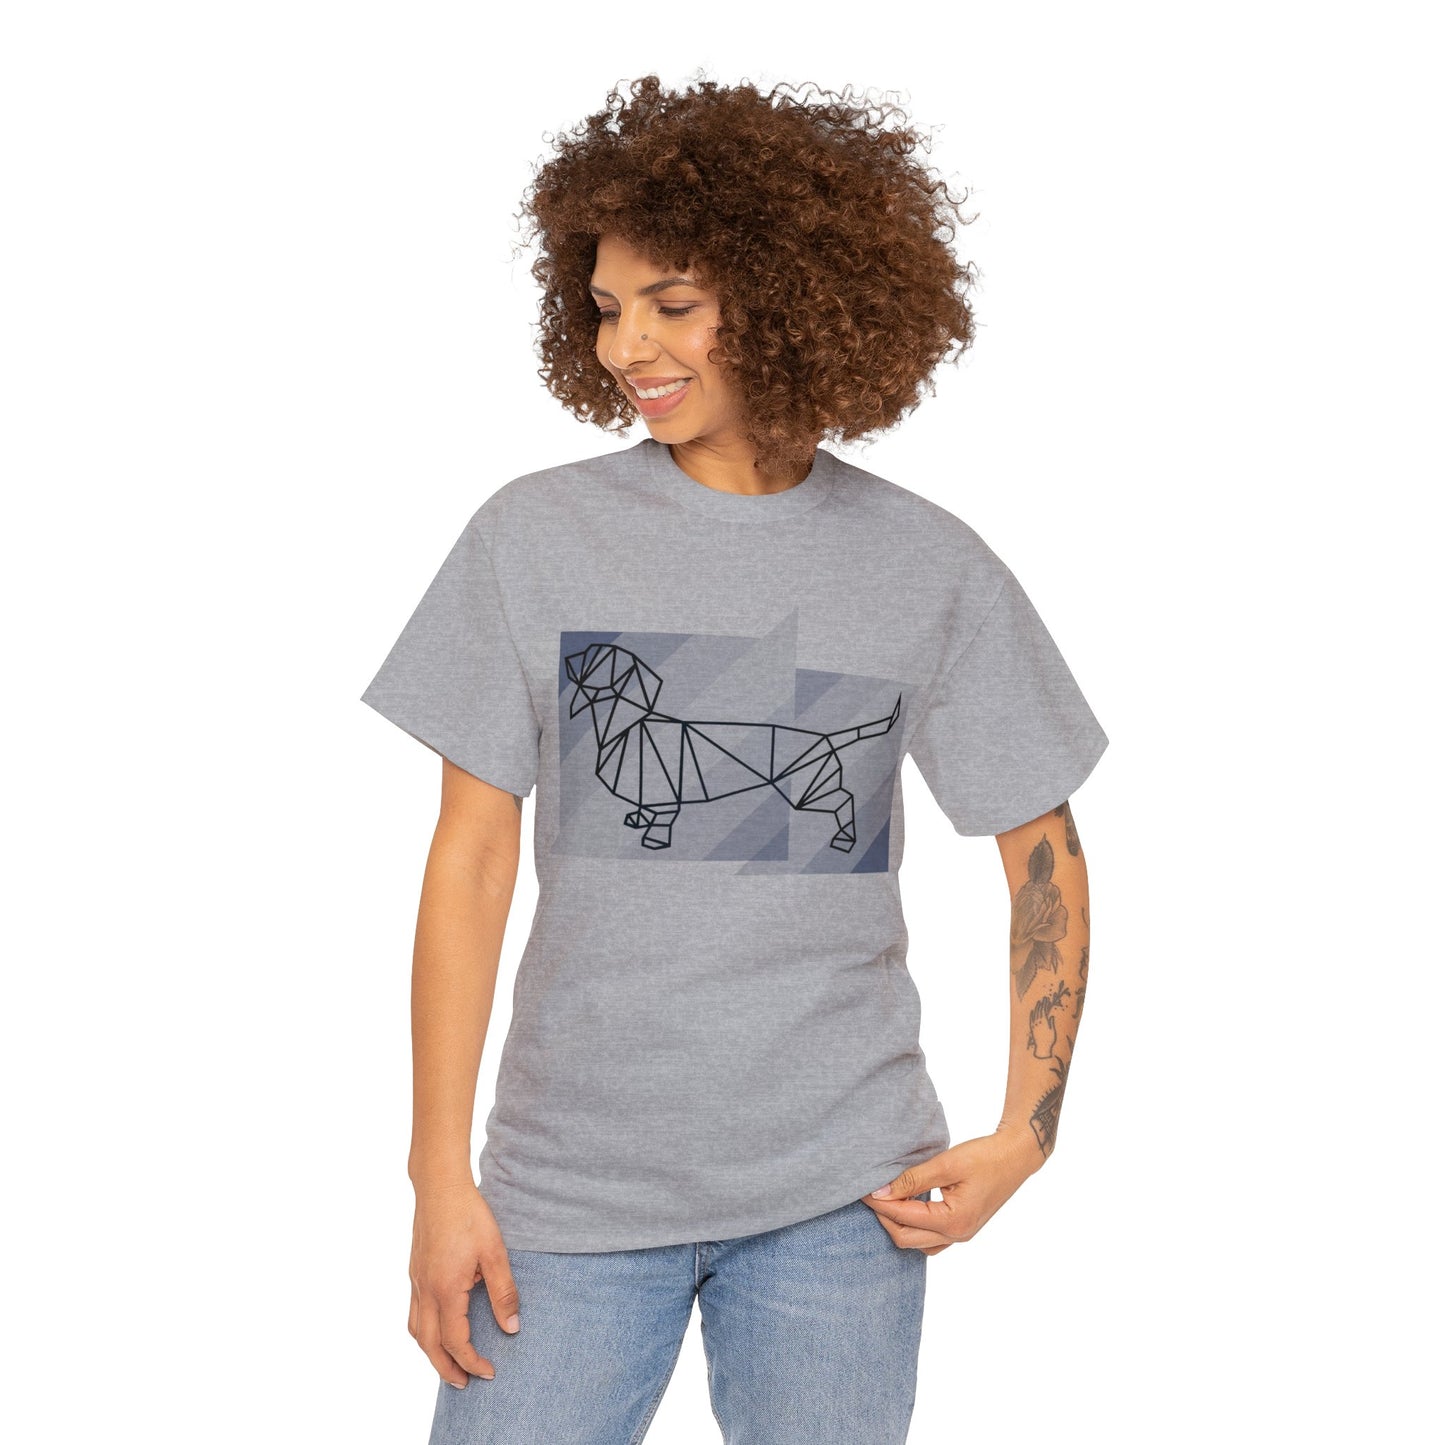 Dachshund T-Shirt, Origami Wiener Dog Tee